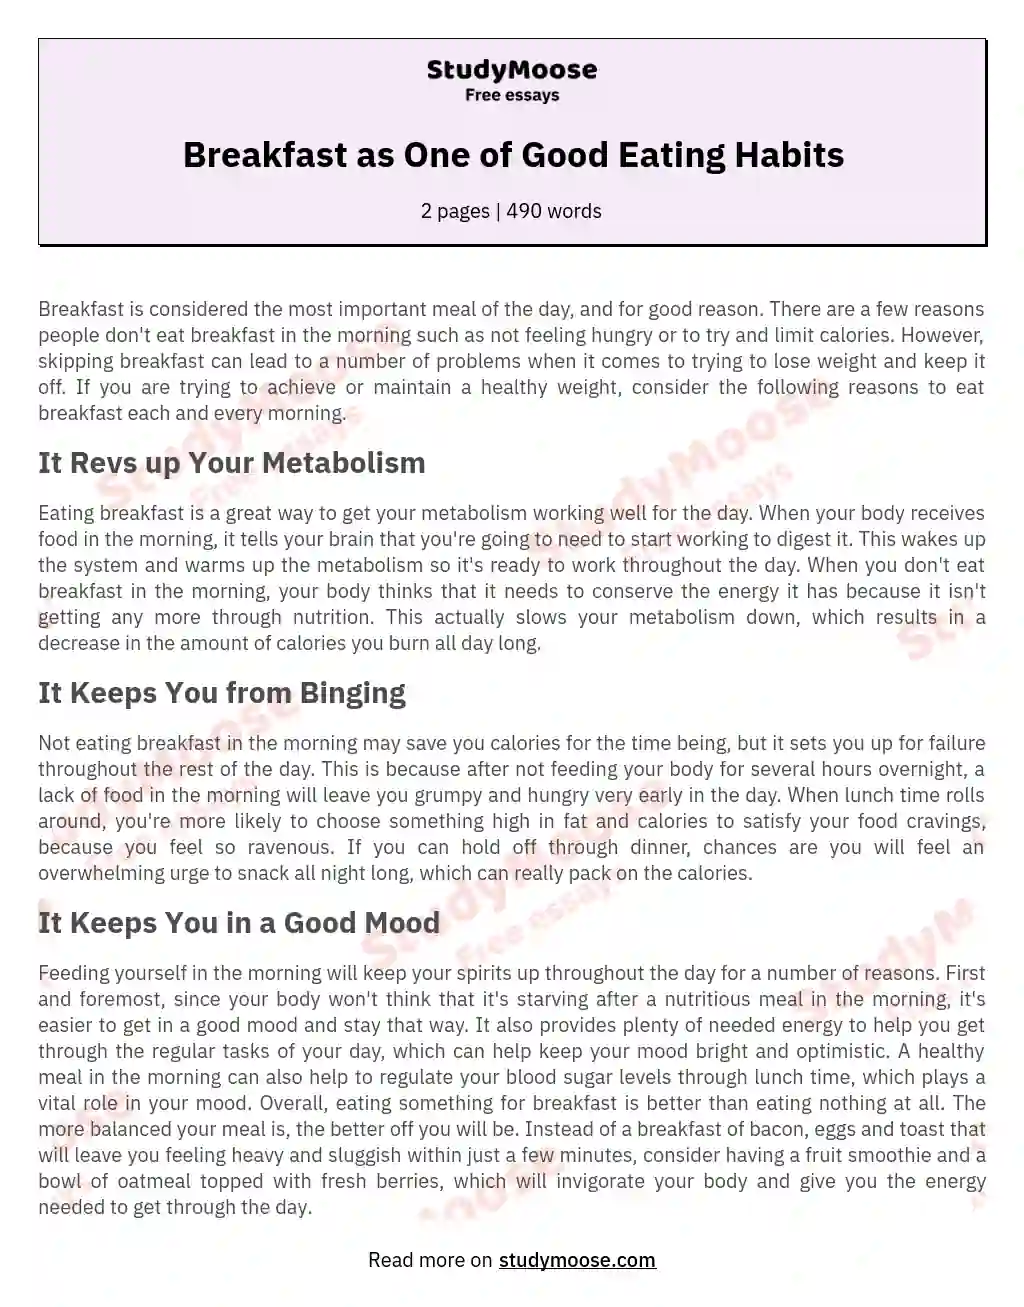 an essay on good habits